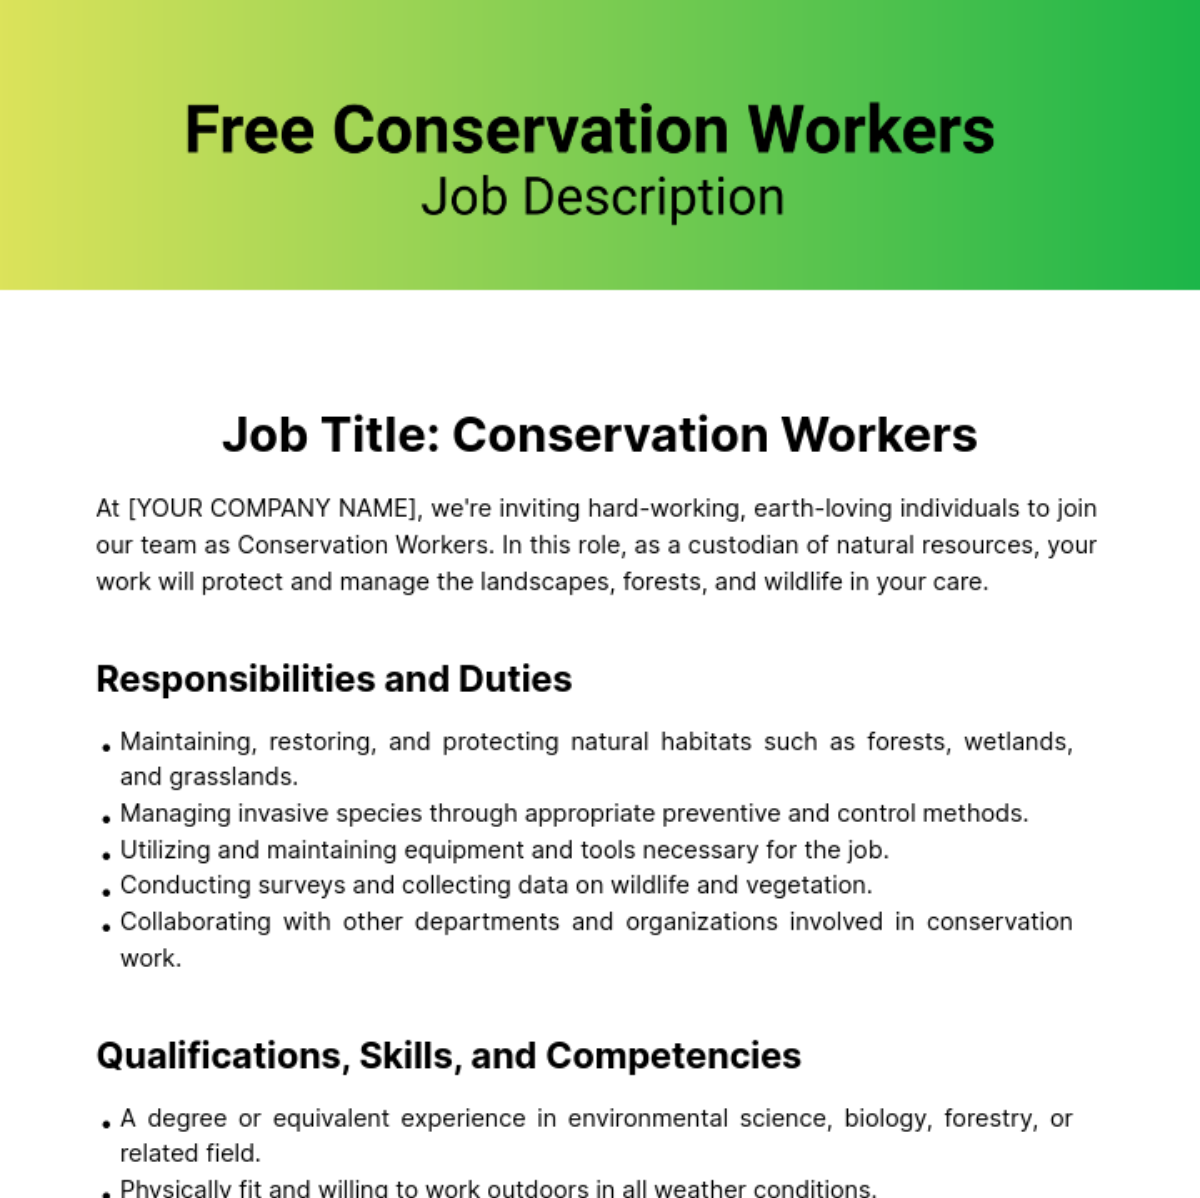 Free Conservation Workers Job Description Template